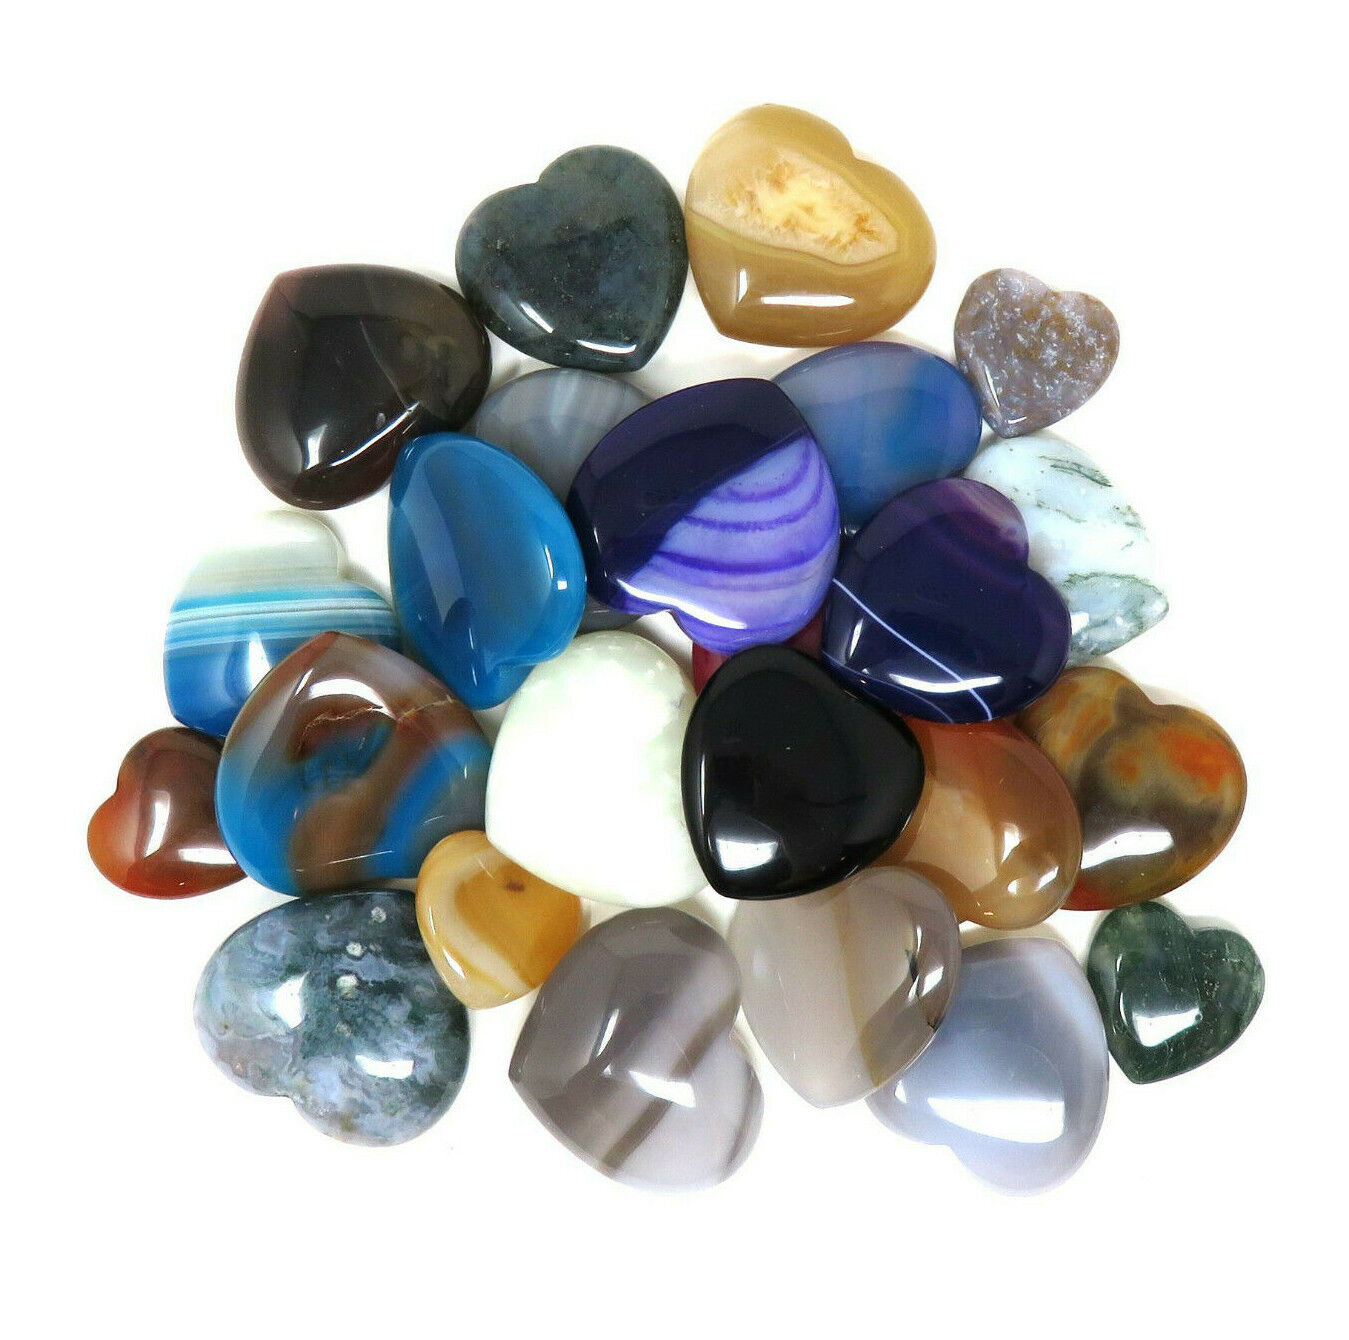 Set of 20 Mixed Agate Stone Hearts - Various Sizes - Random